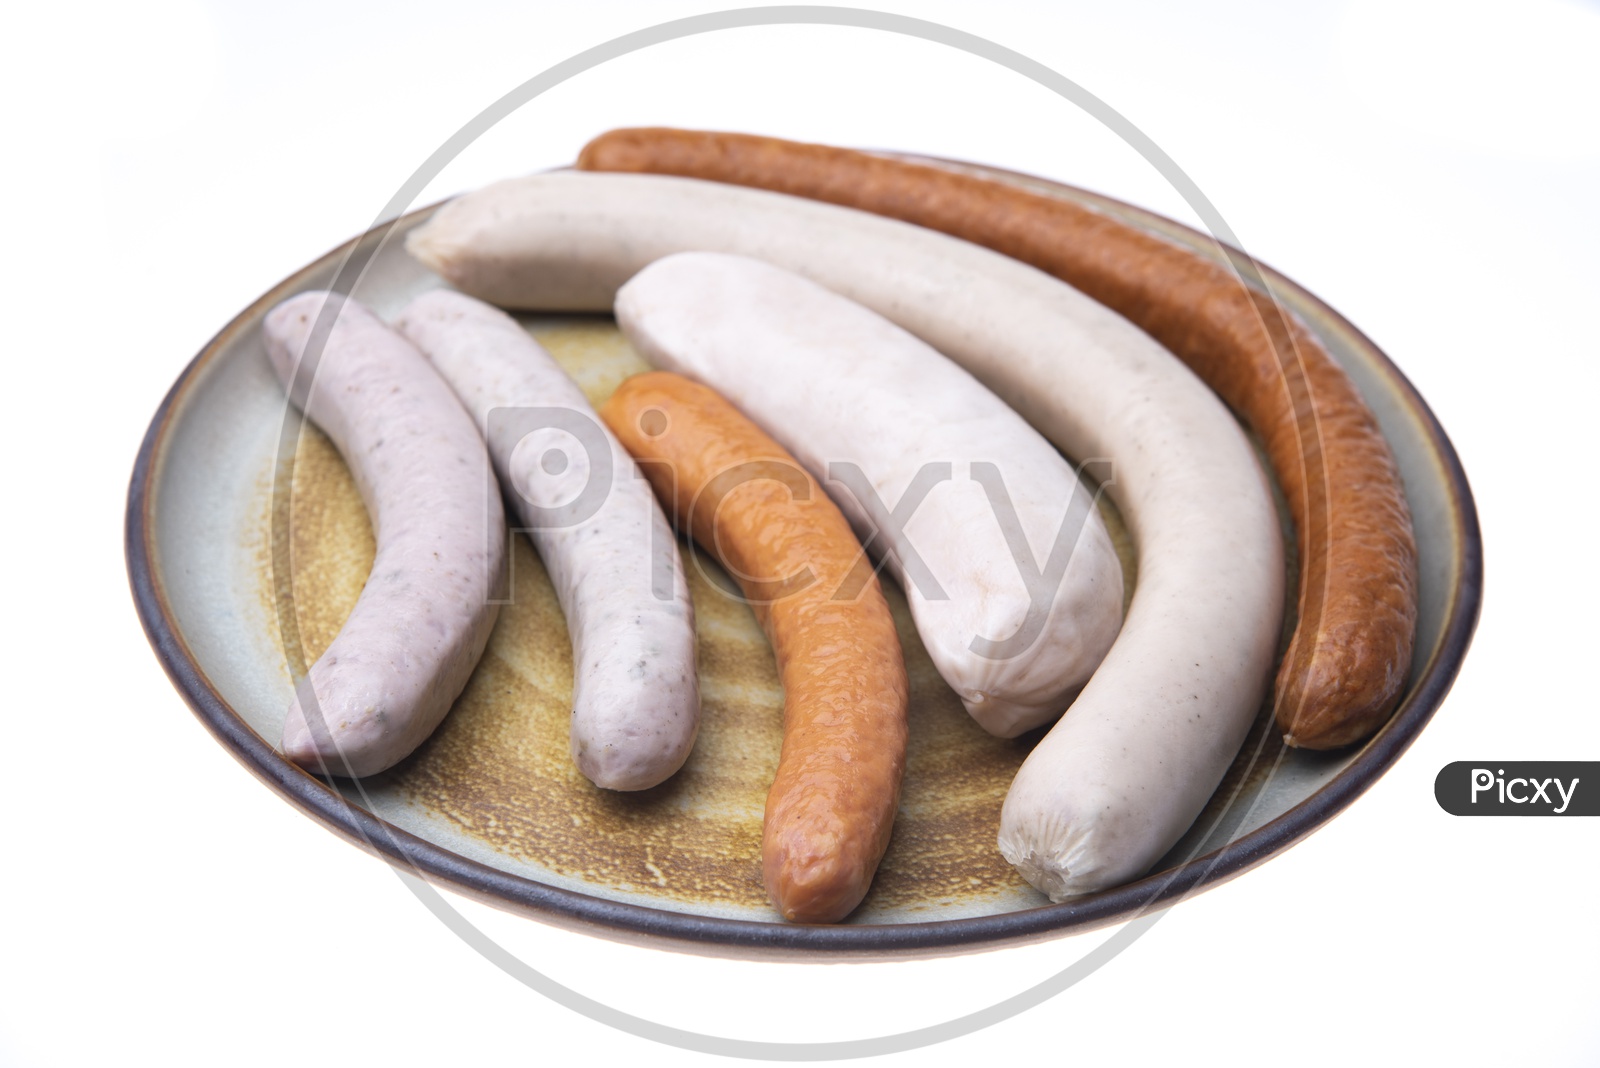 Sausage Set Isolated on White Background